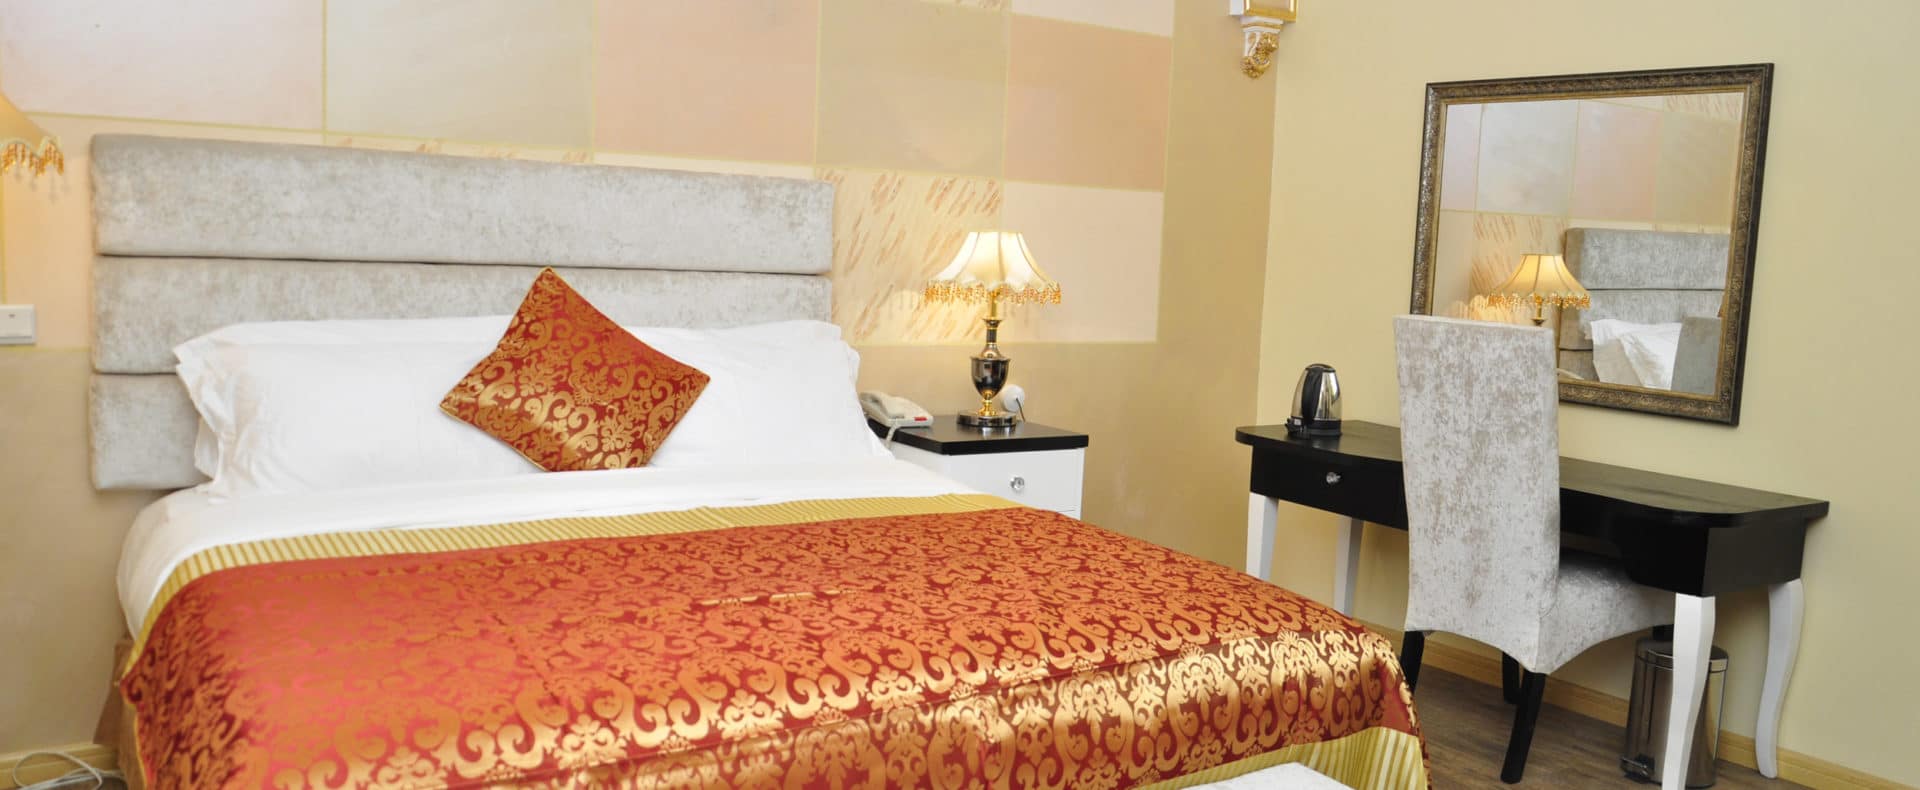 Hotel Deluxe Room In Abuja Fct Nigeria